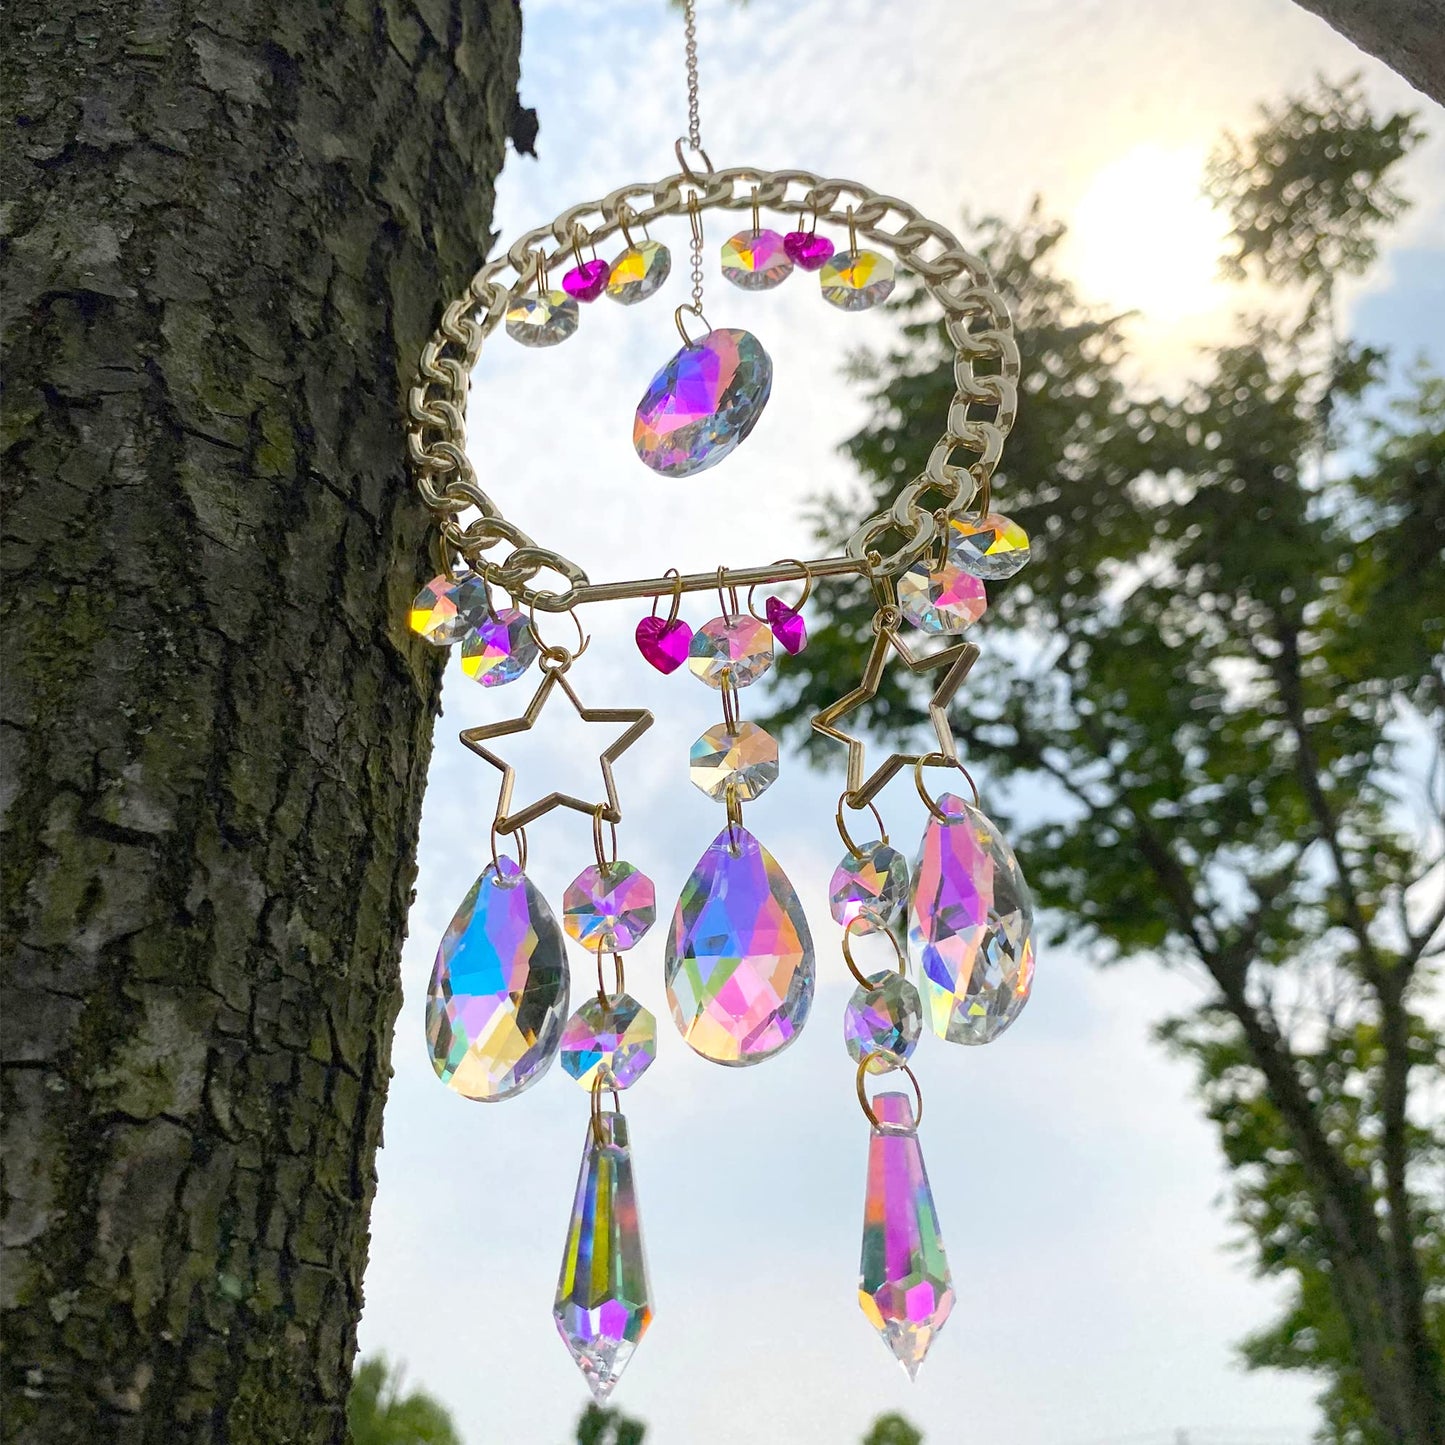 Crystal Suncatcher for Window Hanging Crystals Prism Sun Catcher Ornament Rainbow Maker Indoor Outdoor Decor Home Garden Room Decoration